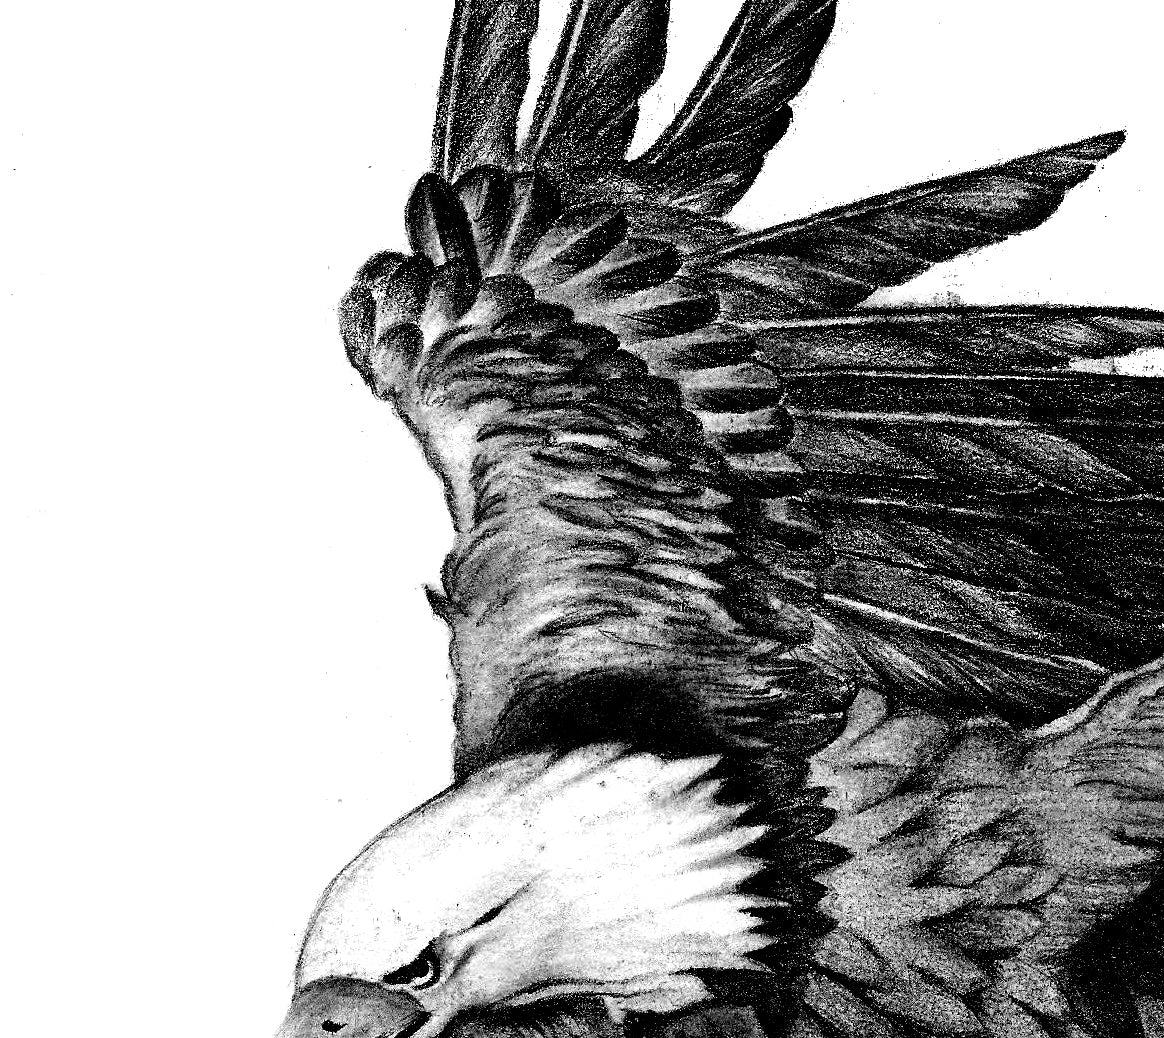 flying eagle tattoo